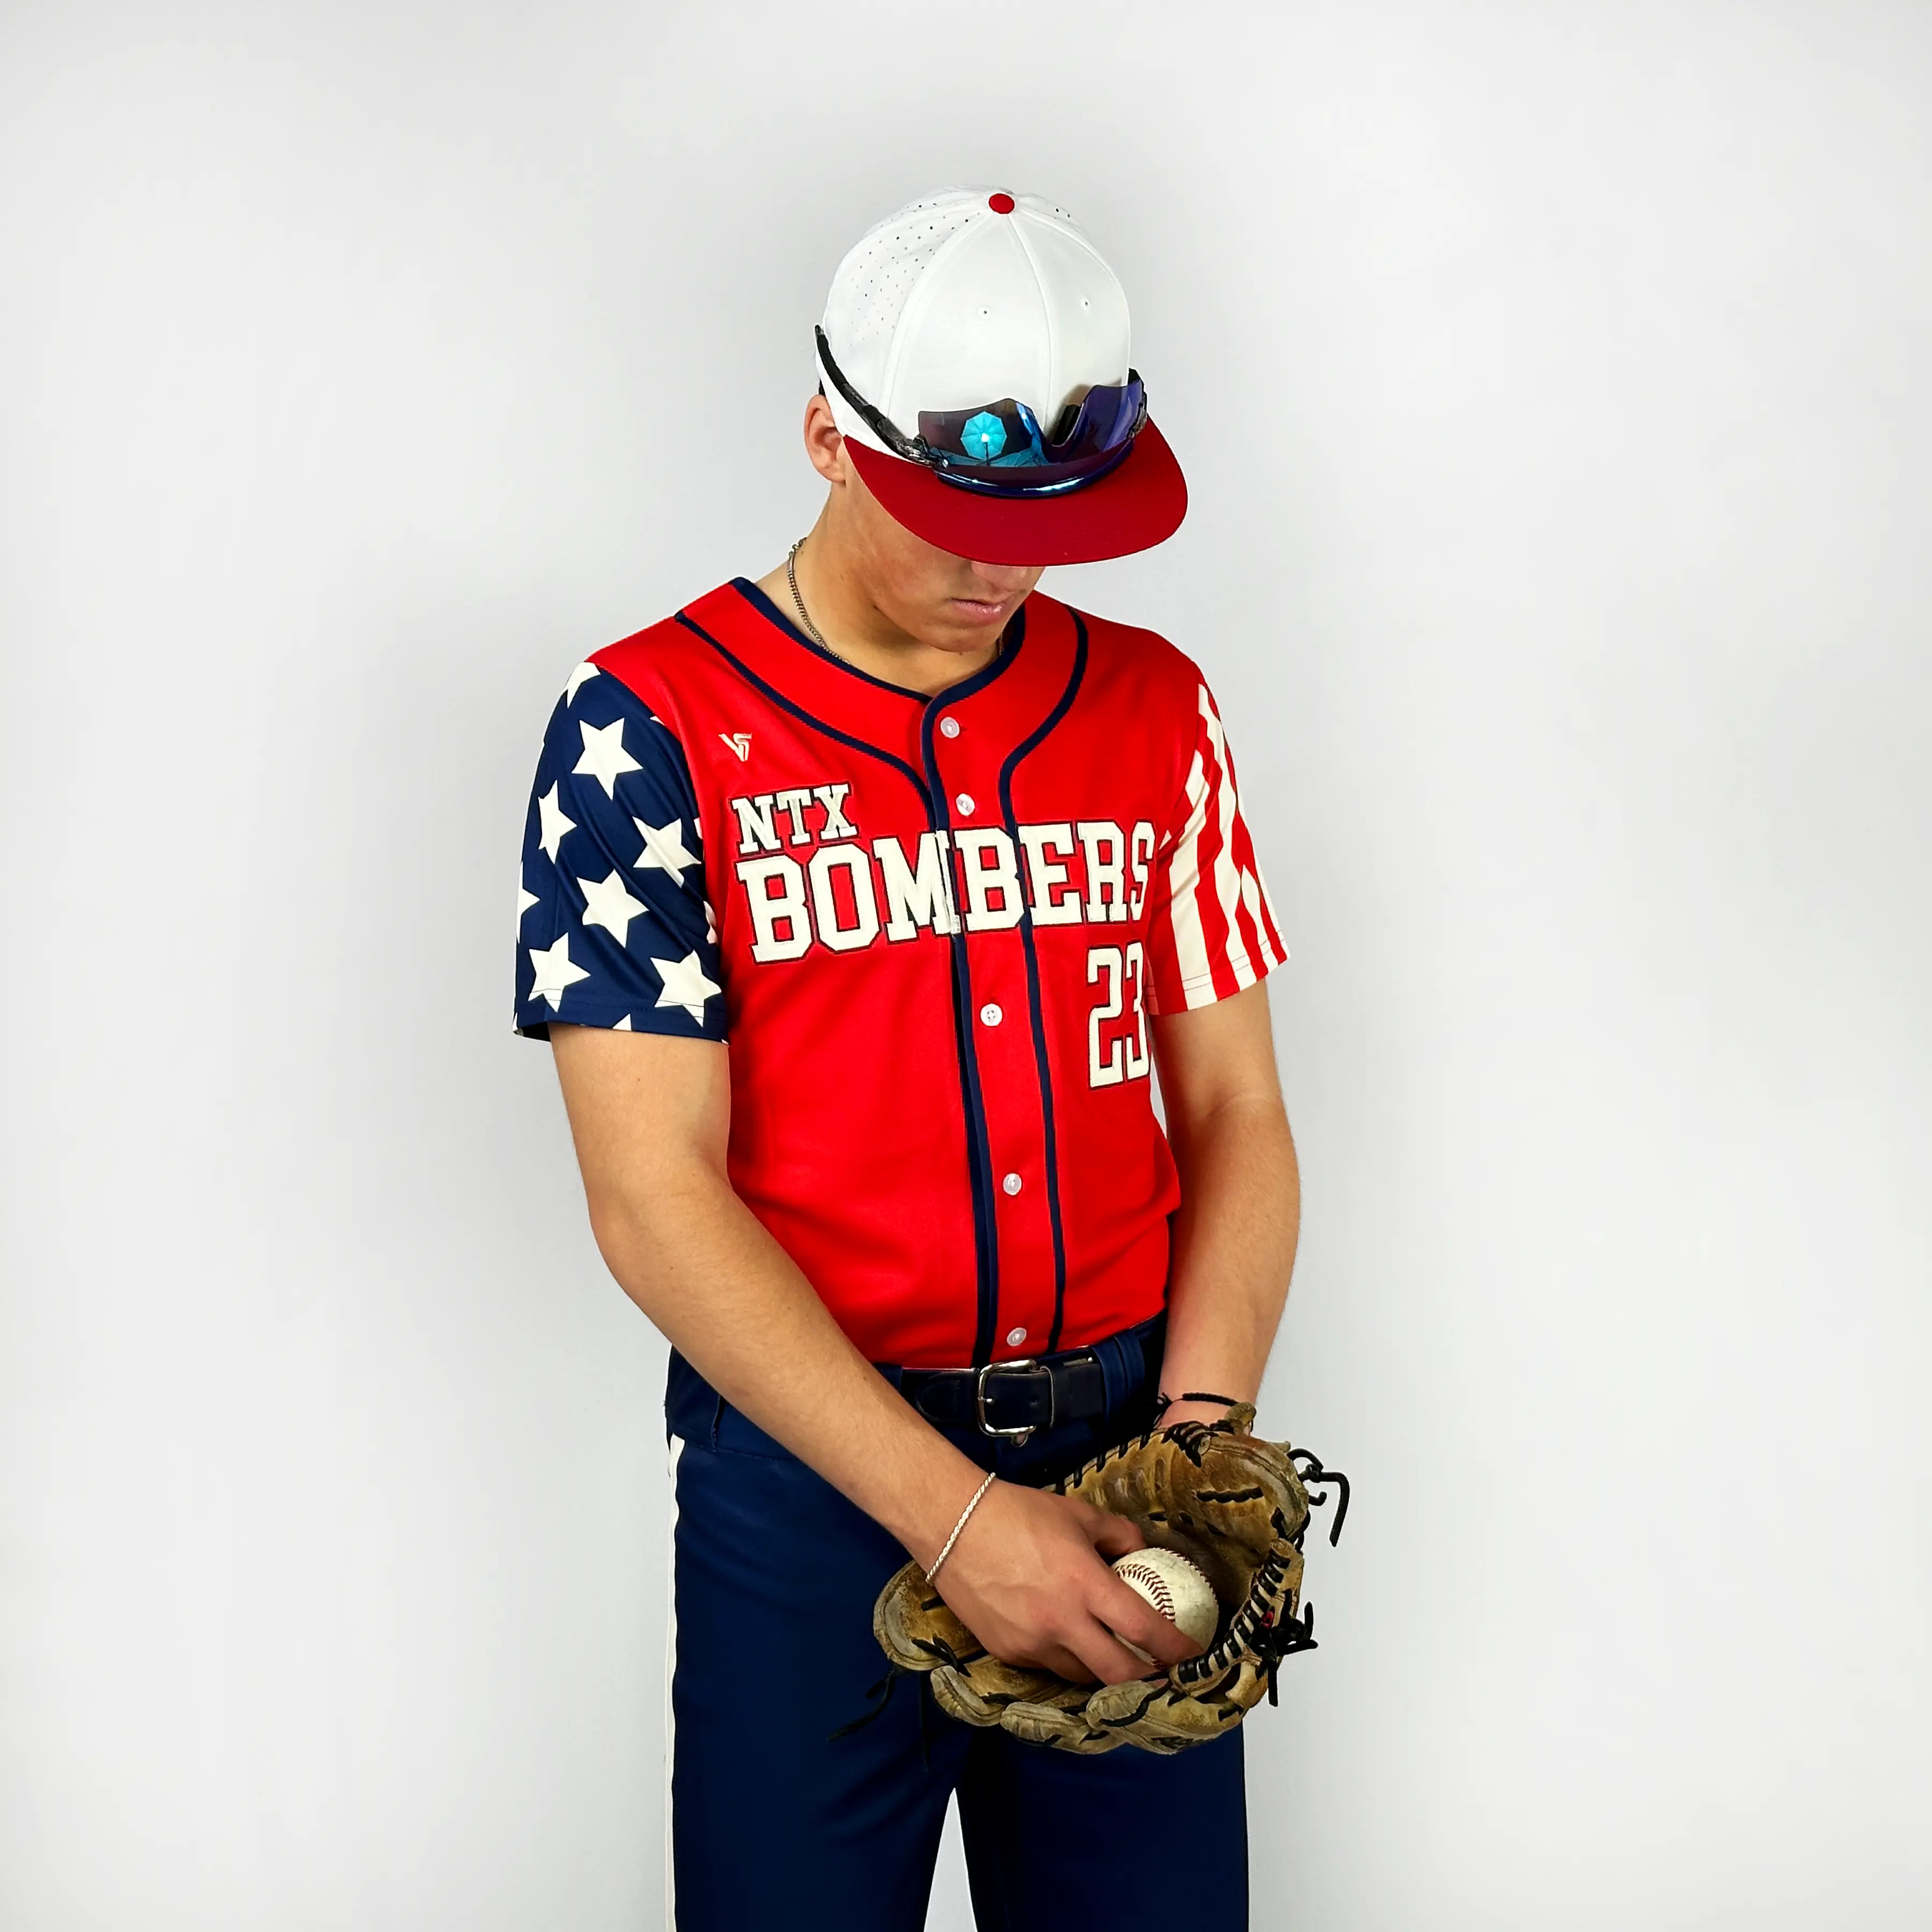 Red Bombers Baseball Uniform